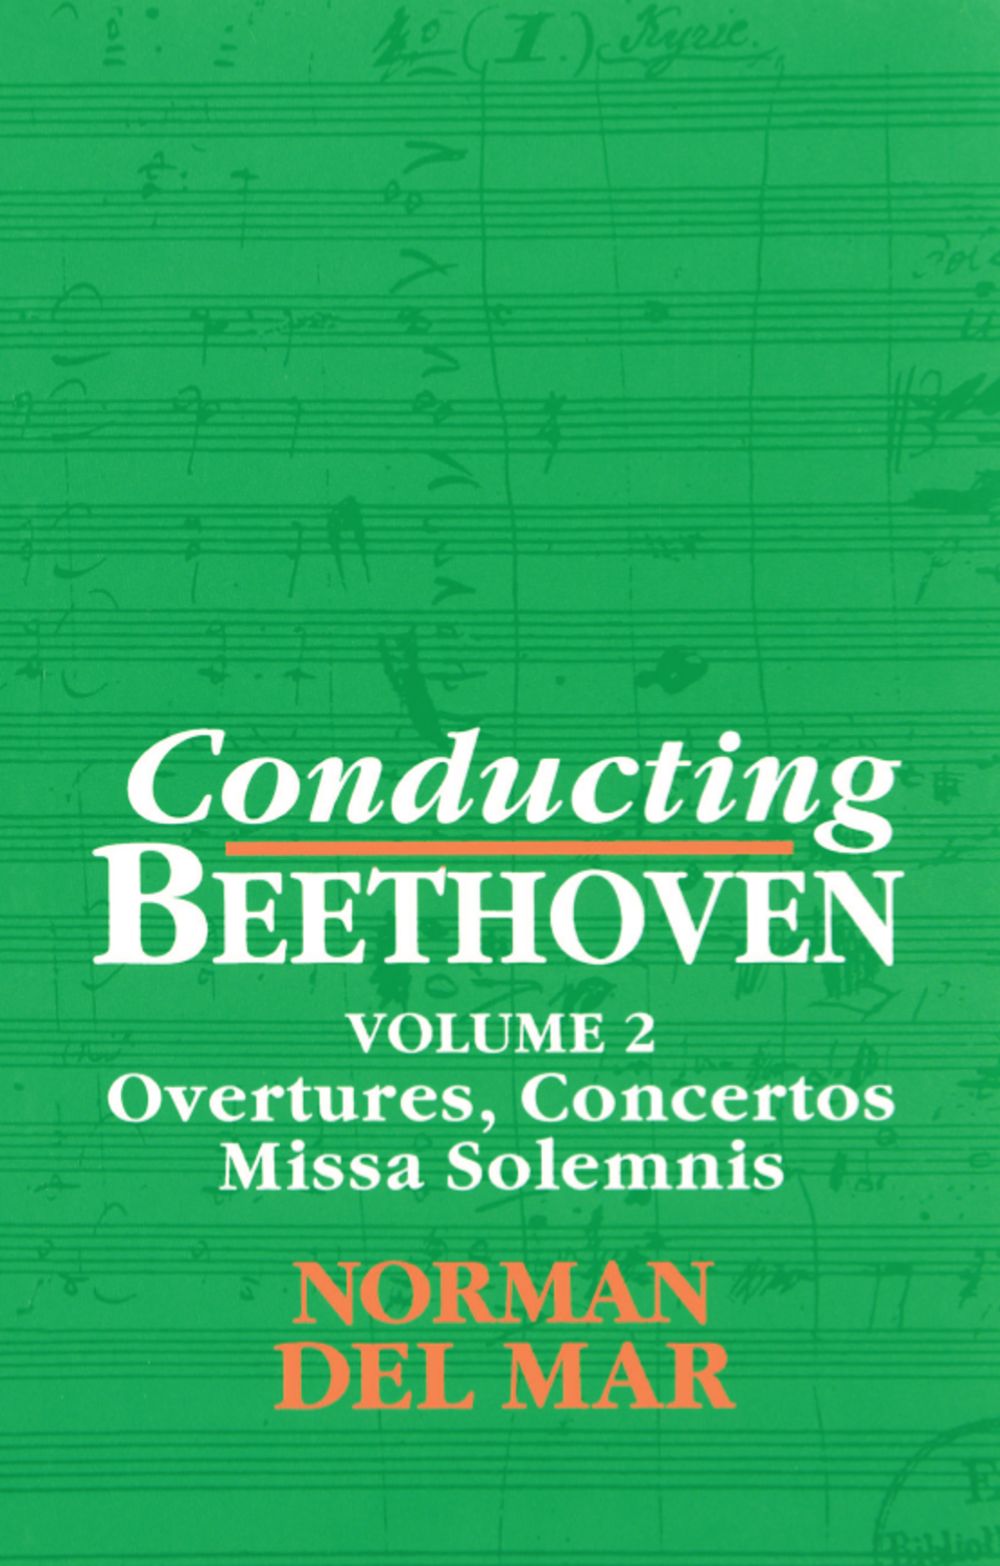 Del Mar Conducting Beethoven Volume 2 Paperback Sheet Music Songbook